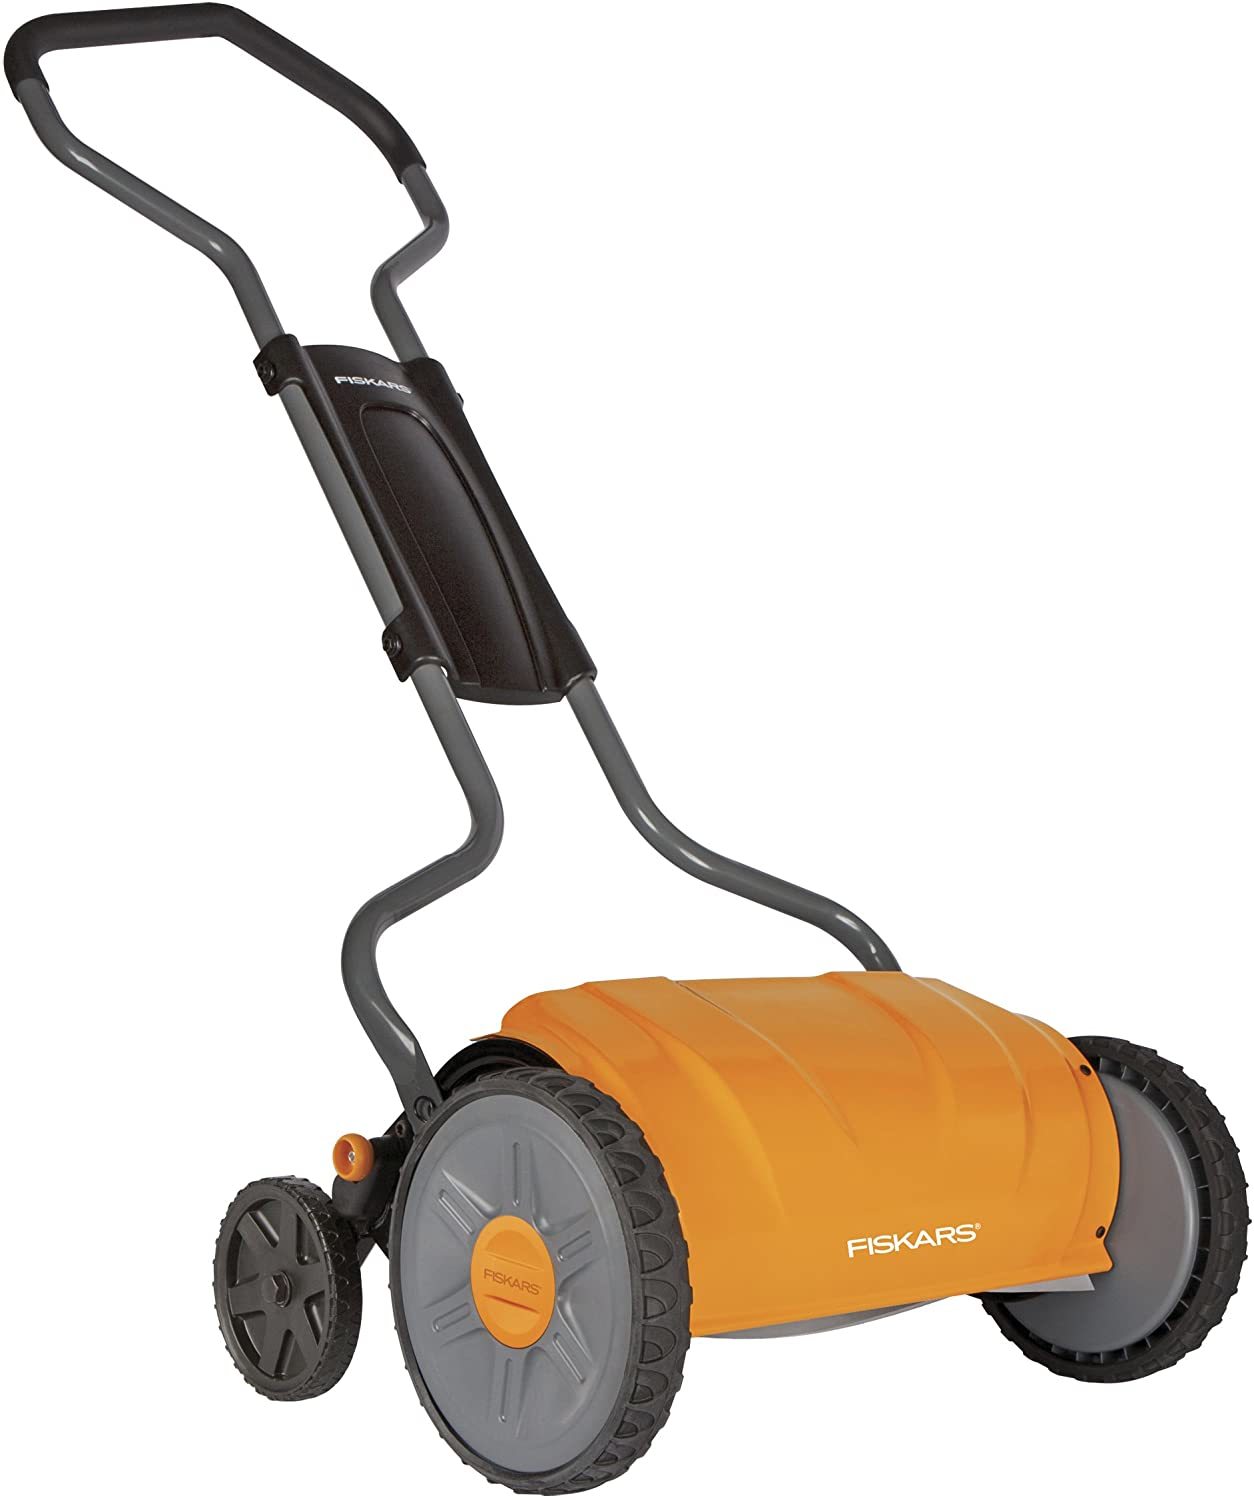 Fiskars 17 Inch Staysharp Push Reel Lawn Mower (6208), Orange - $222.99